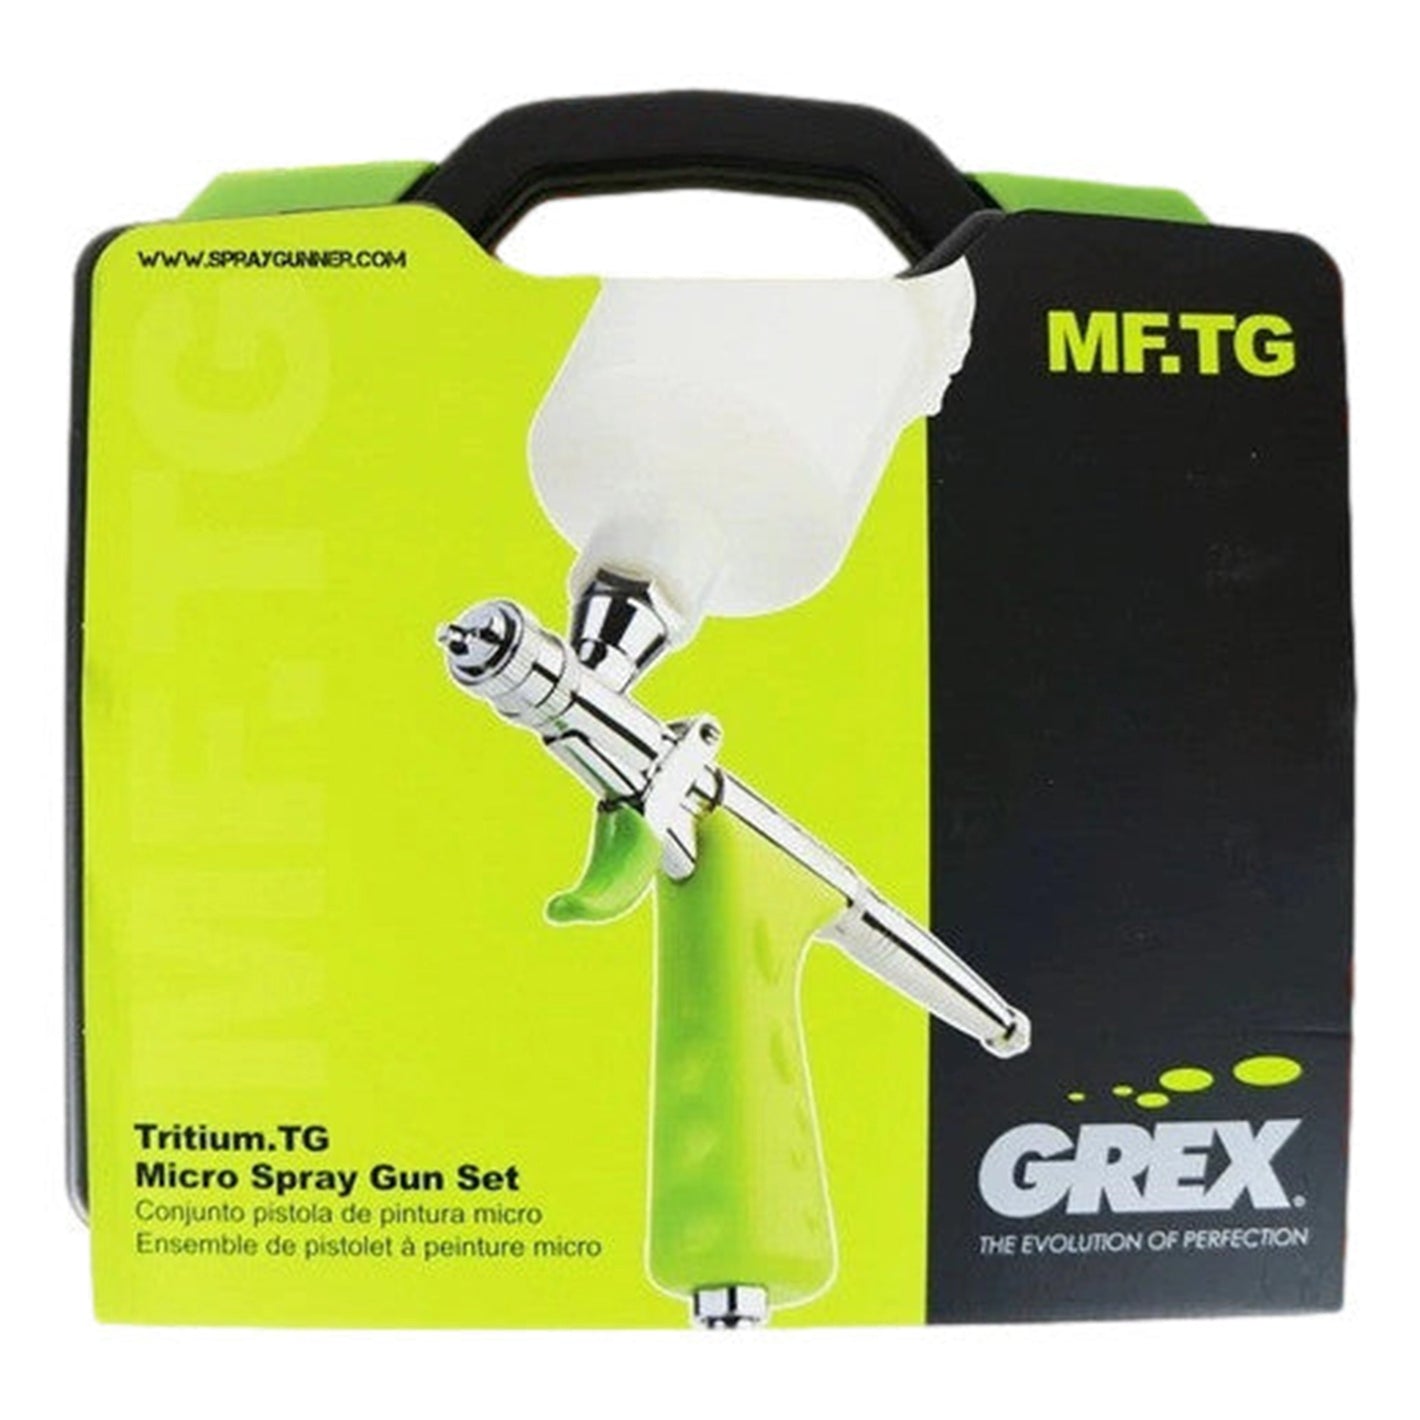 Grex Tritium.TG Micro Spray Gun Set (MF.TG)